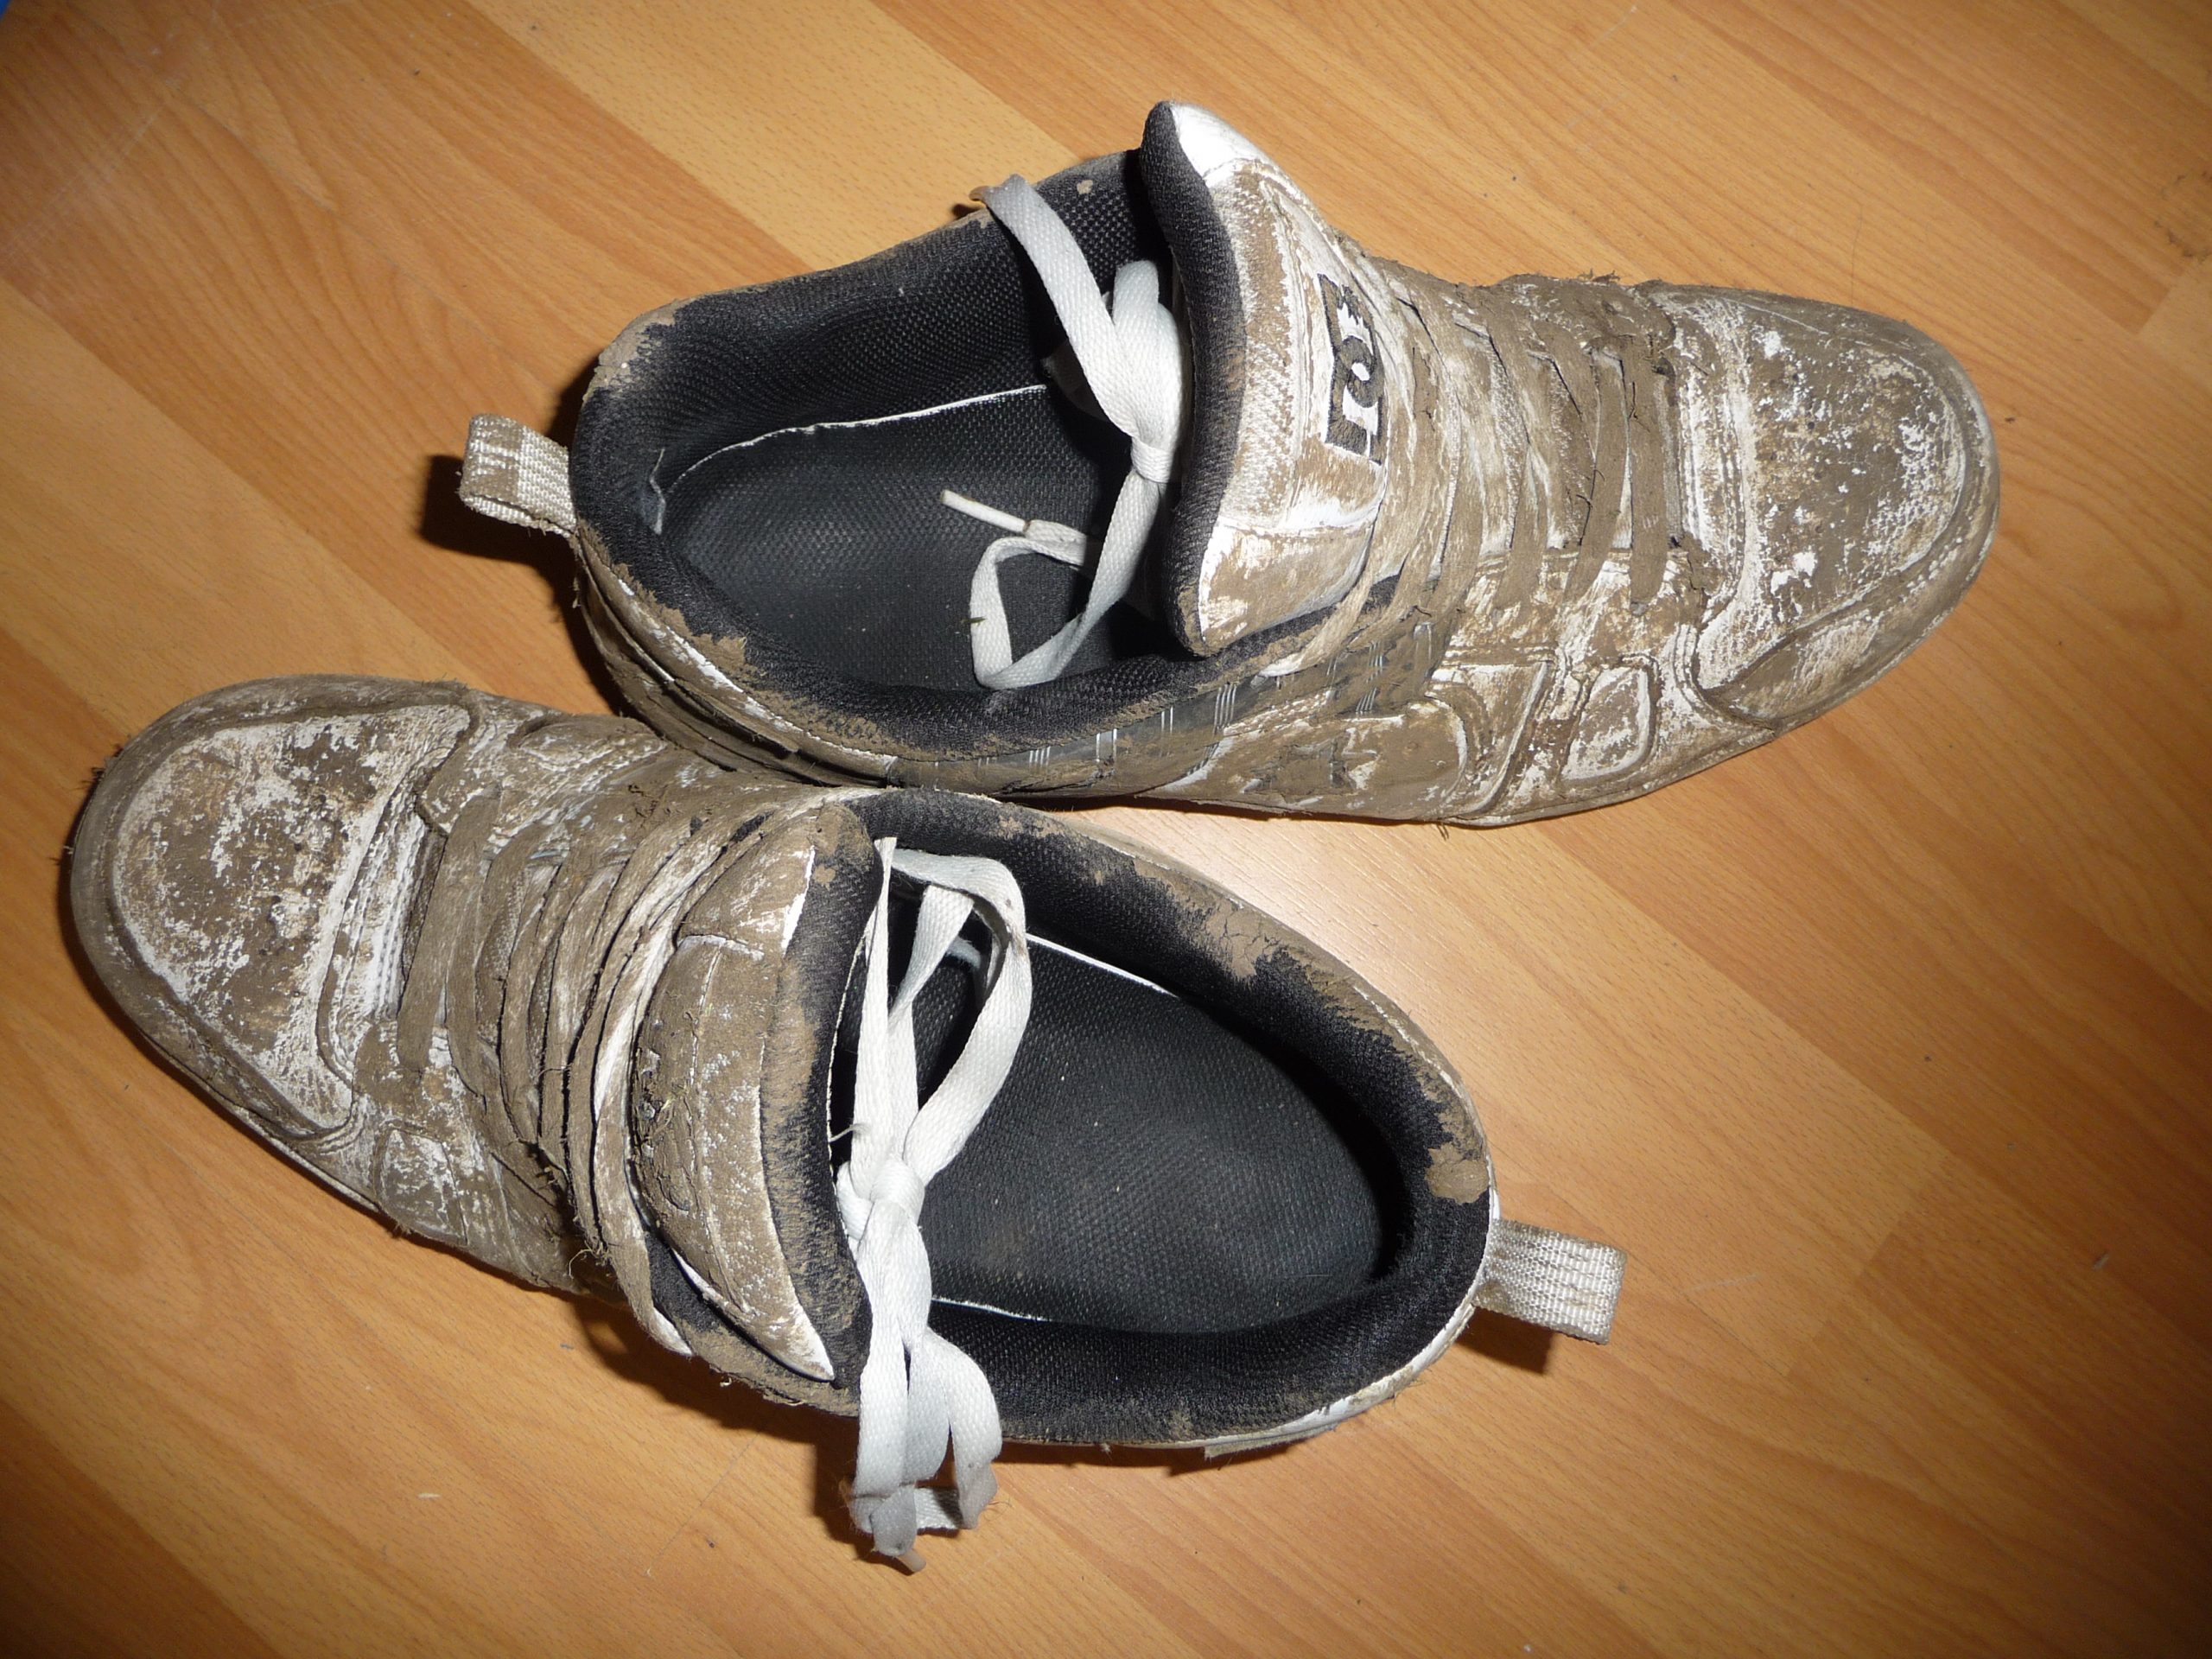 Muddy_white_shoes